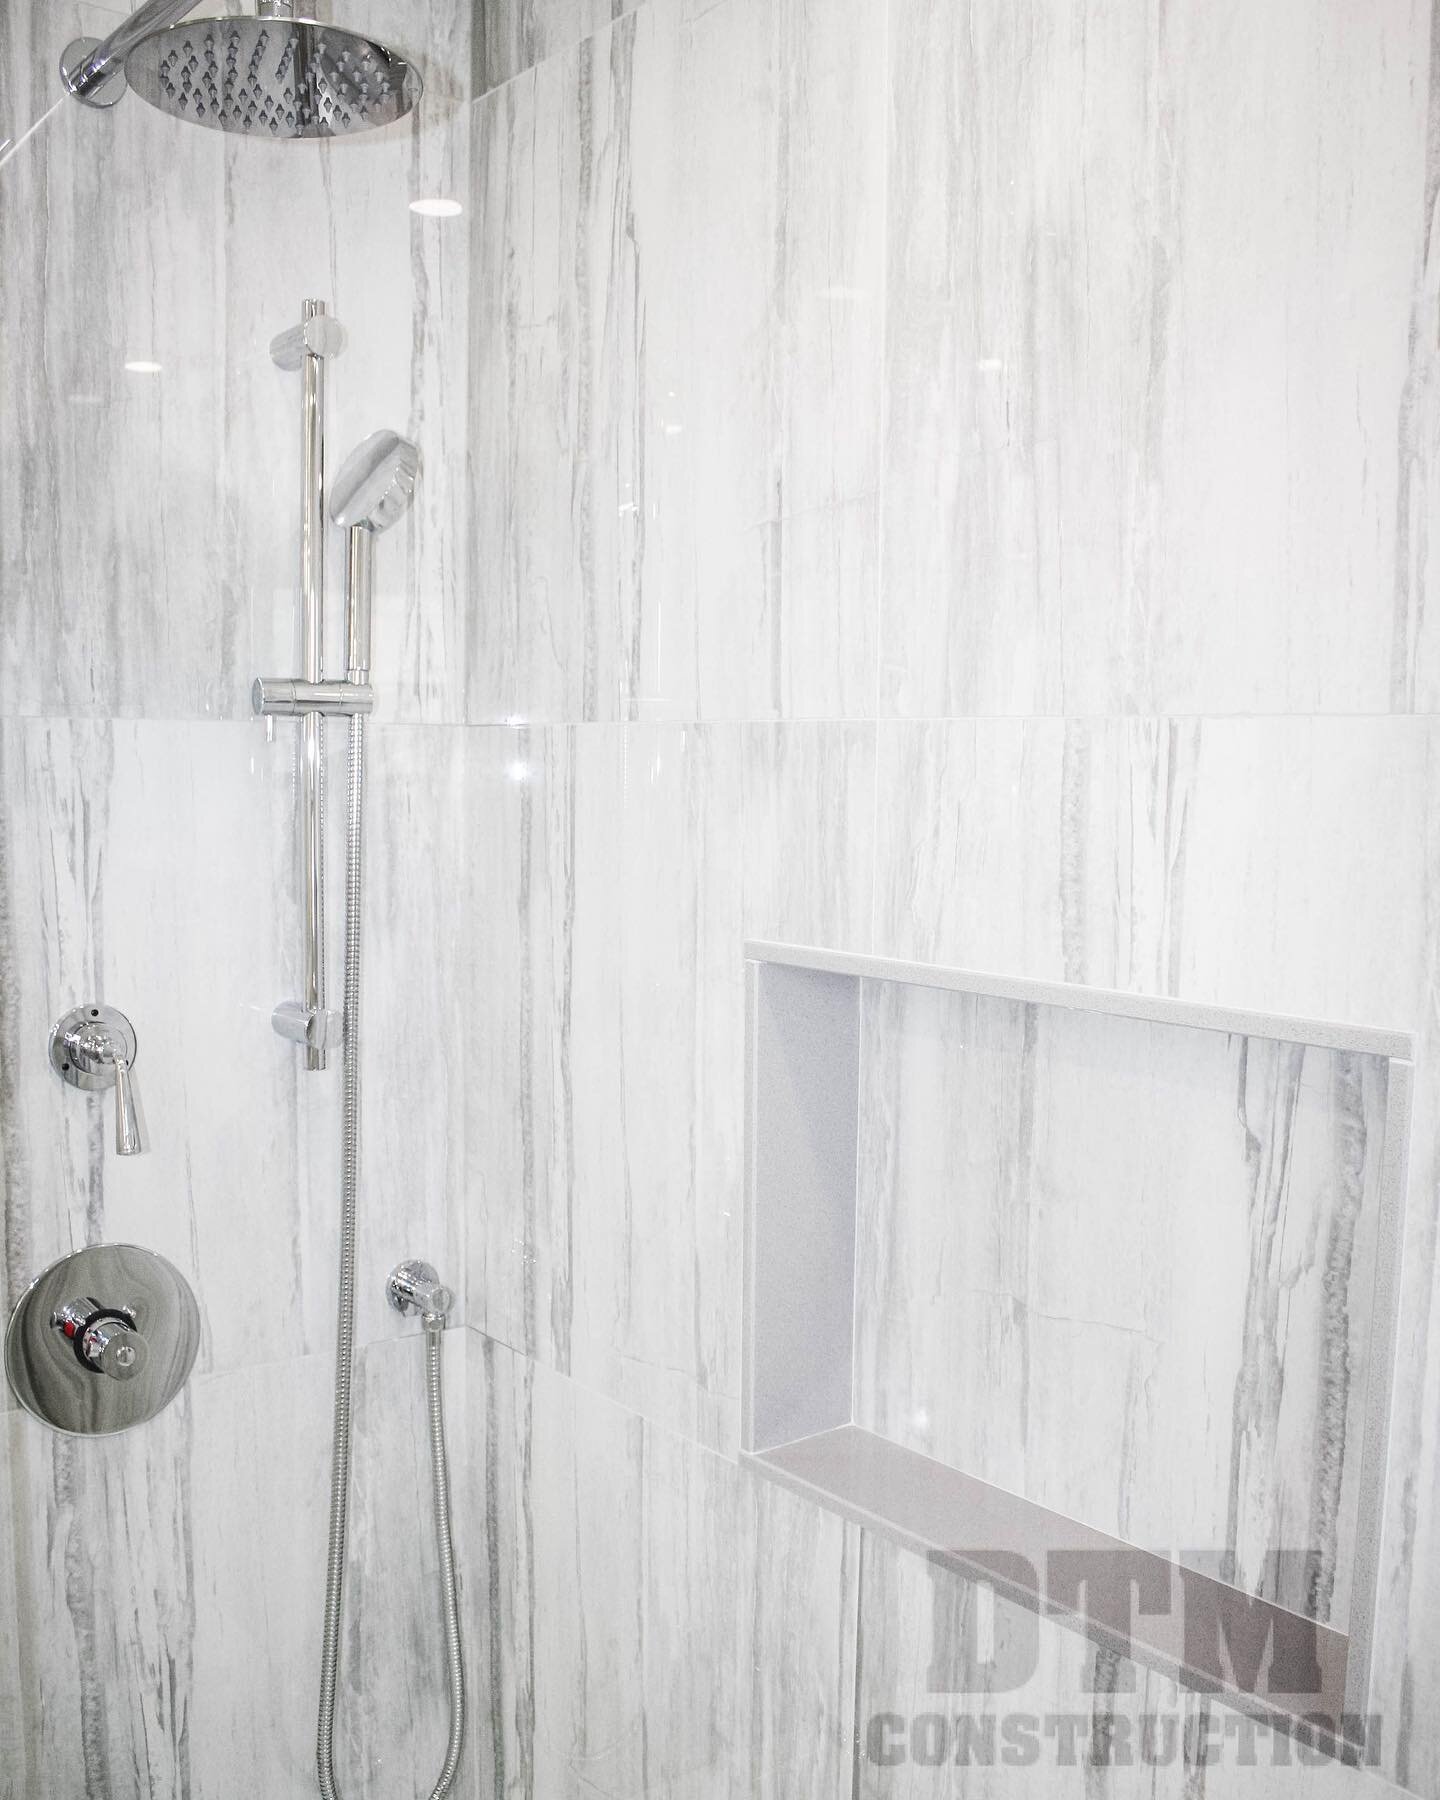 All in the details. DTM making custom showers and bathrooms for your personal needs. ⠀
⠀
#bathroom #bathroomdesign #design #remodel #modernbathroom #dtmconstruction #construction #tile #bath #shower #tub #sink #vanity #bathroomdecor #homedecor #inter